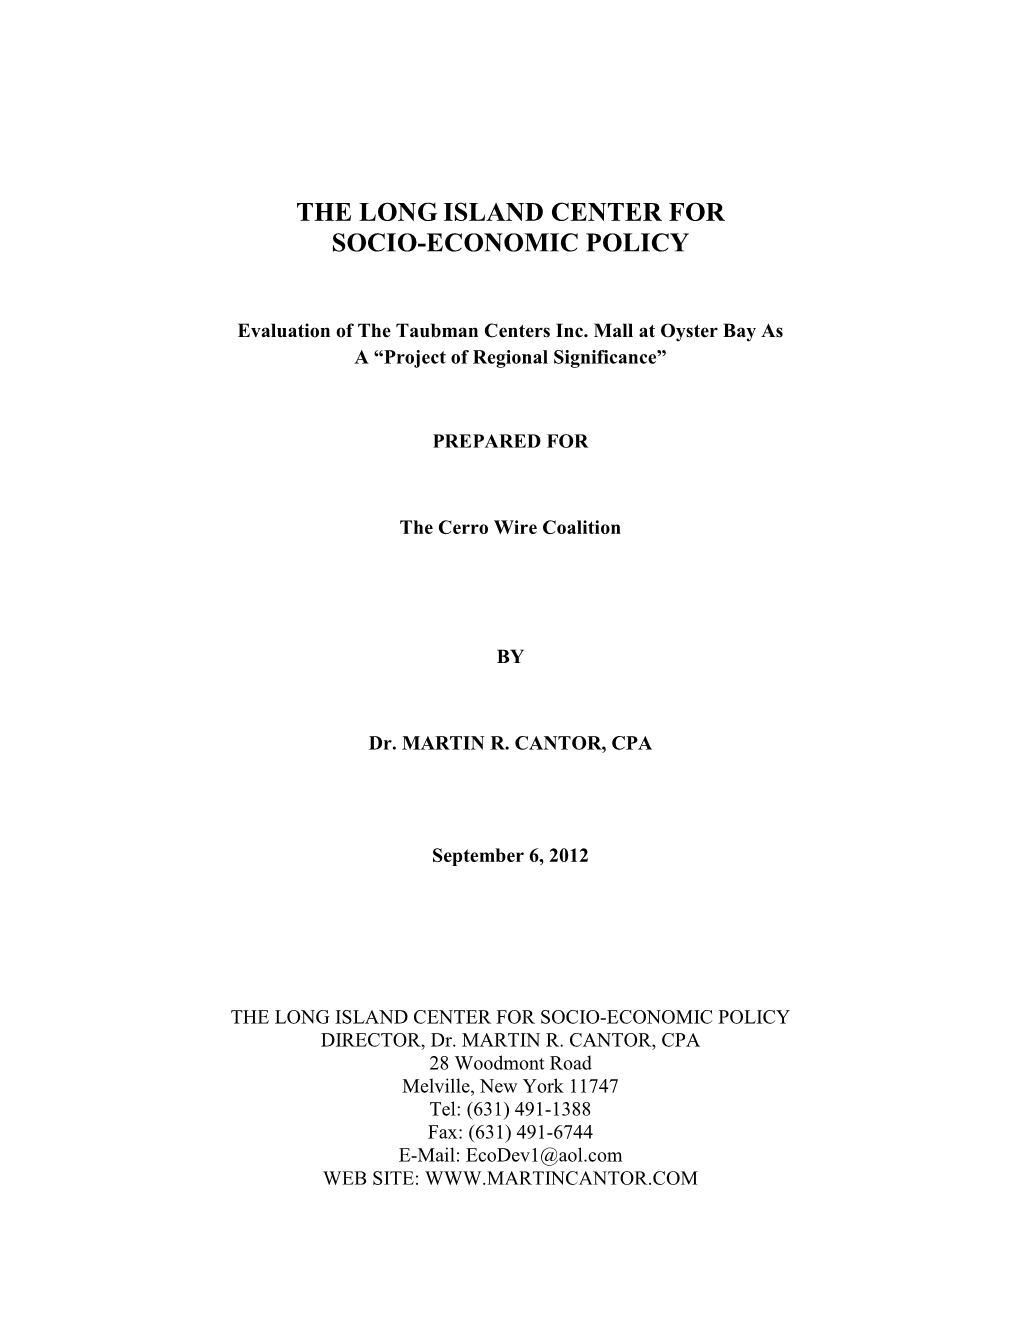 The Long Island Center for Socio-Economic Policy